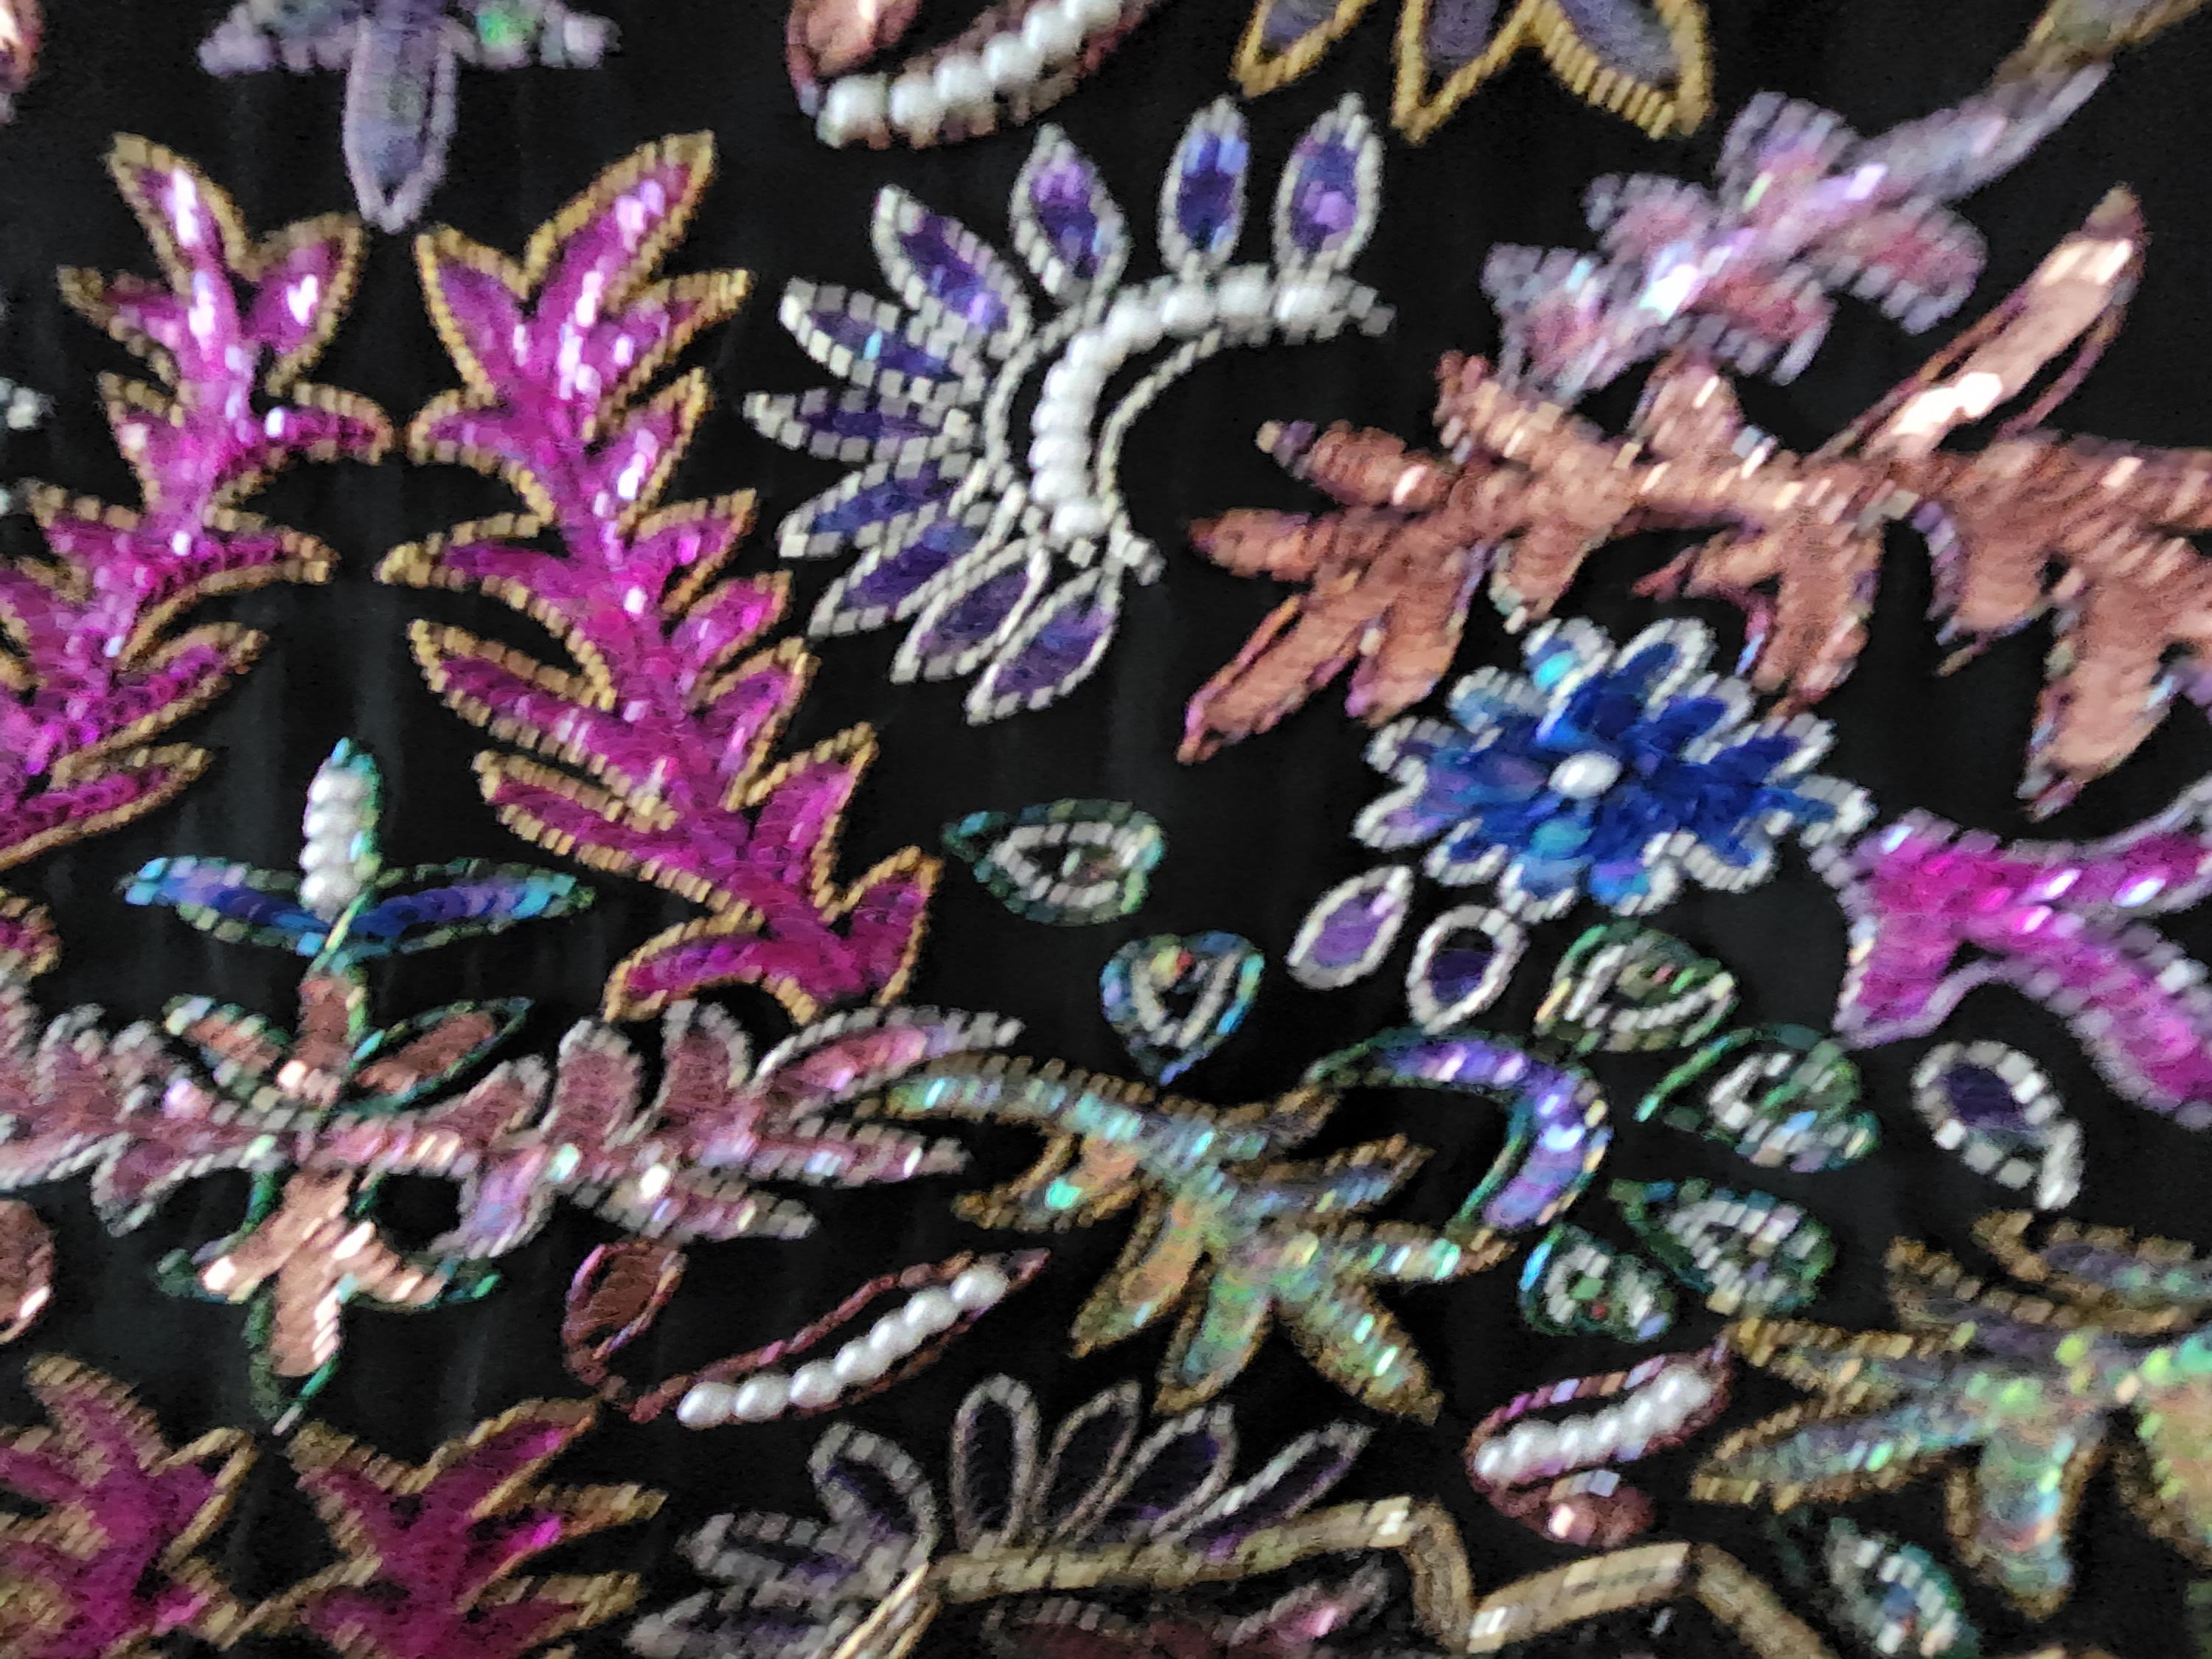 Black colorful floral sequin beaded vintage short sleeve shirt sz M